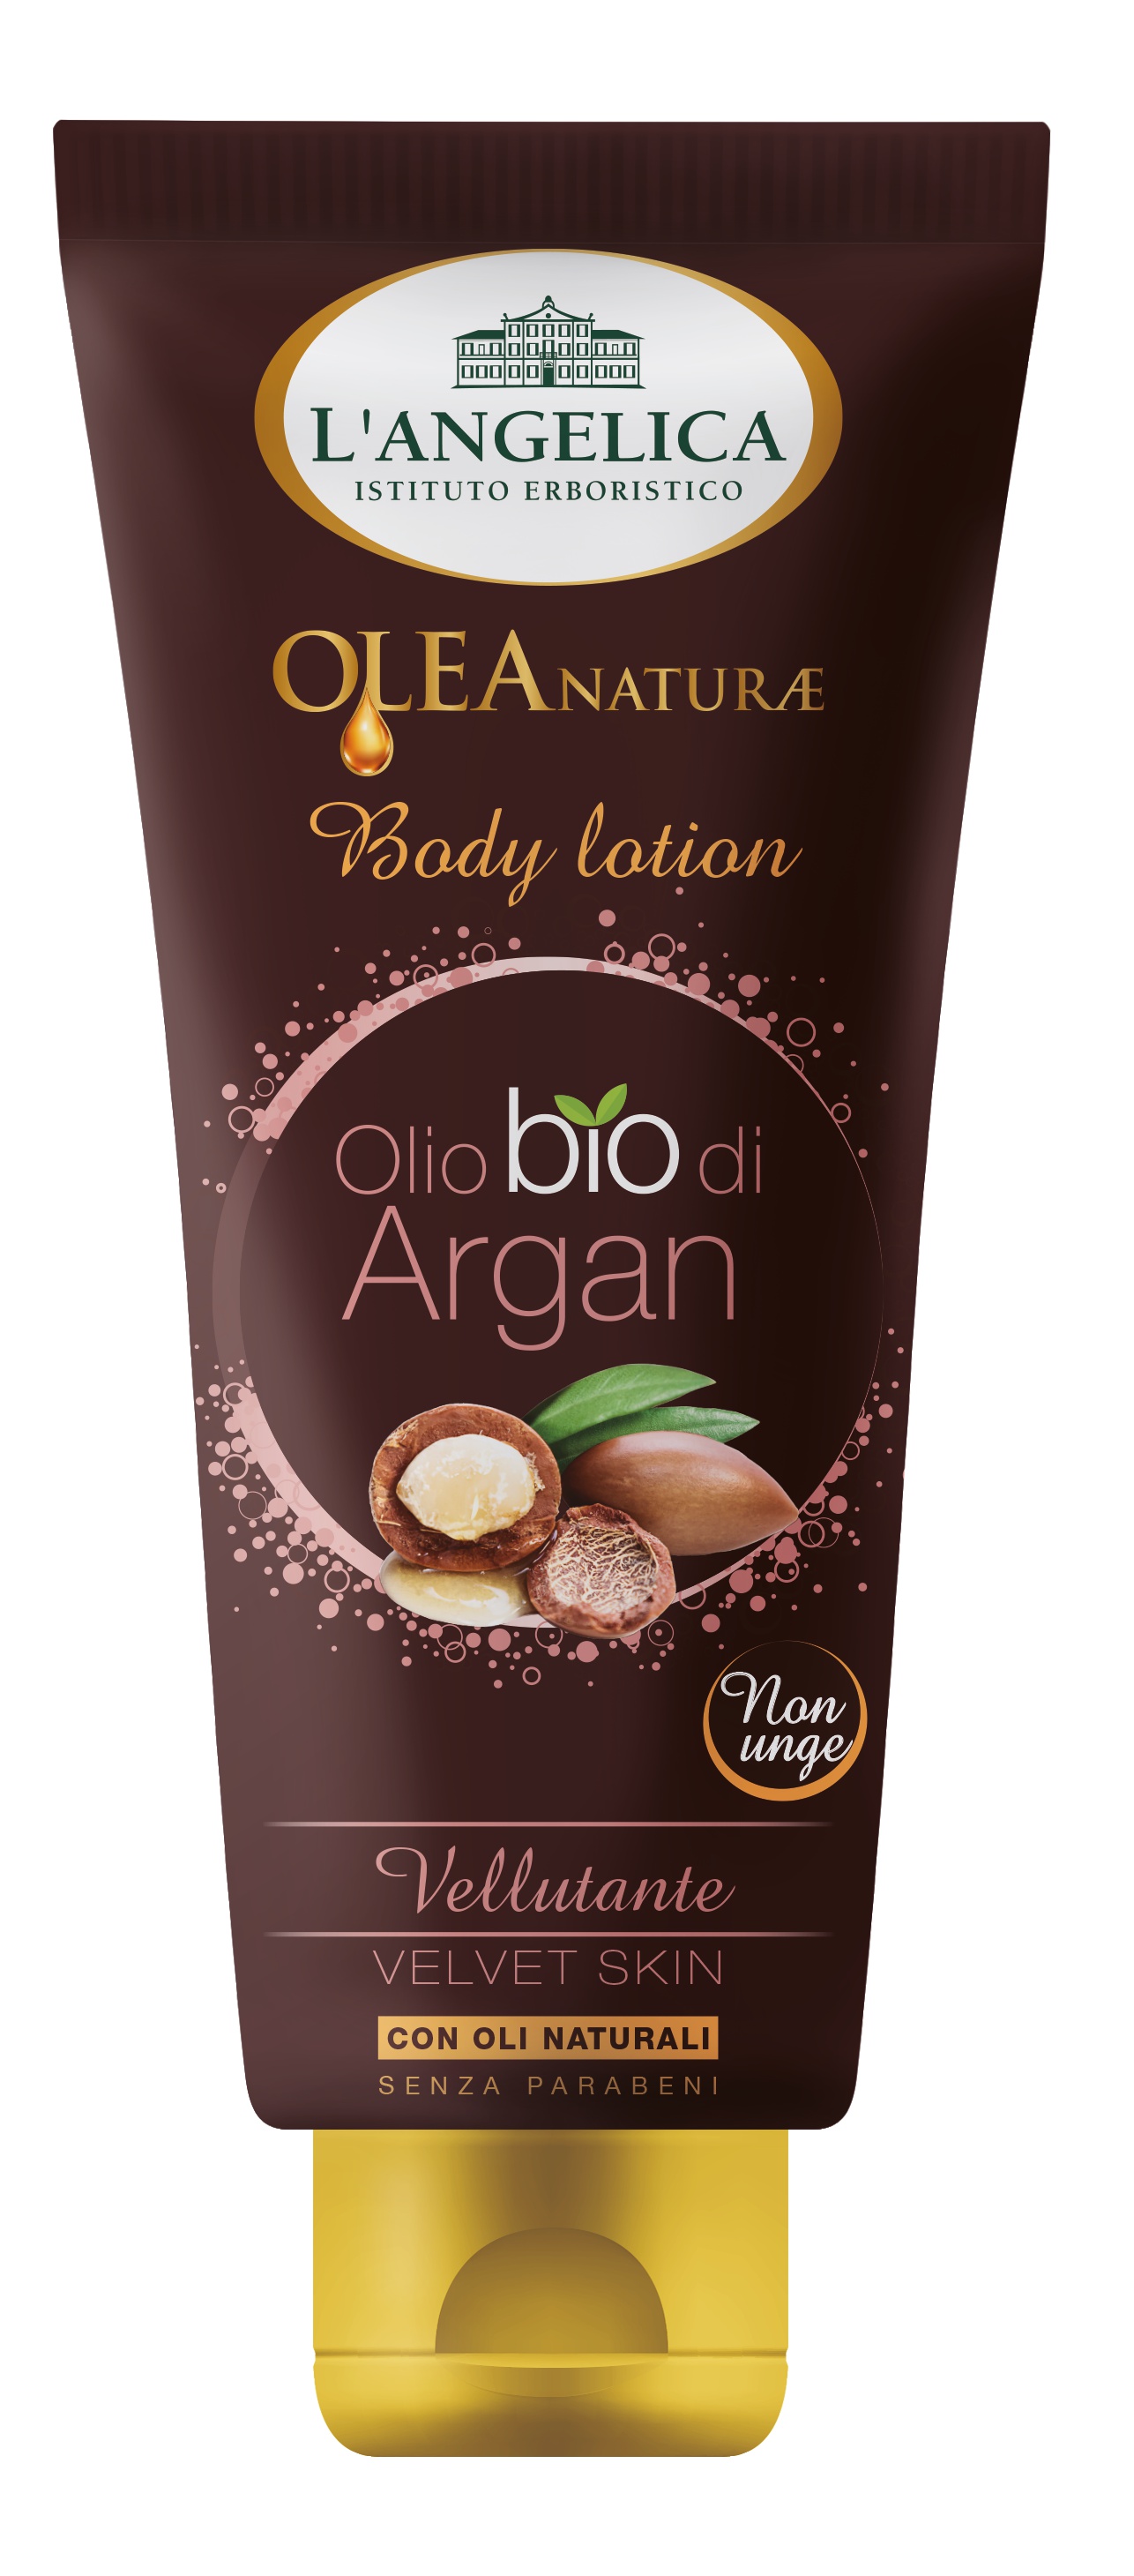 L’Angelica Organic Argan Oil